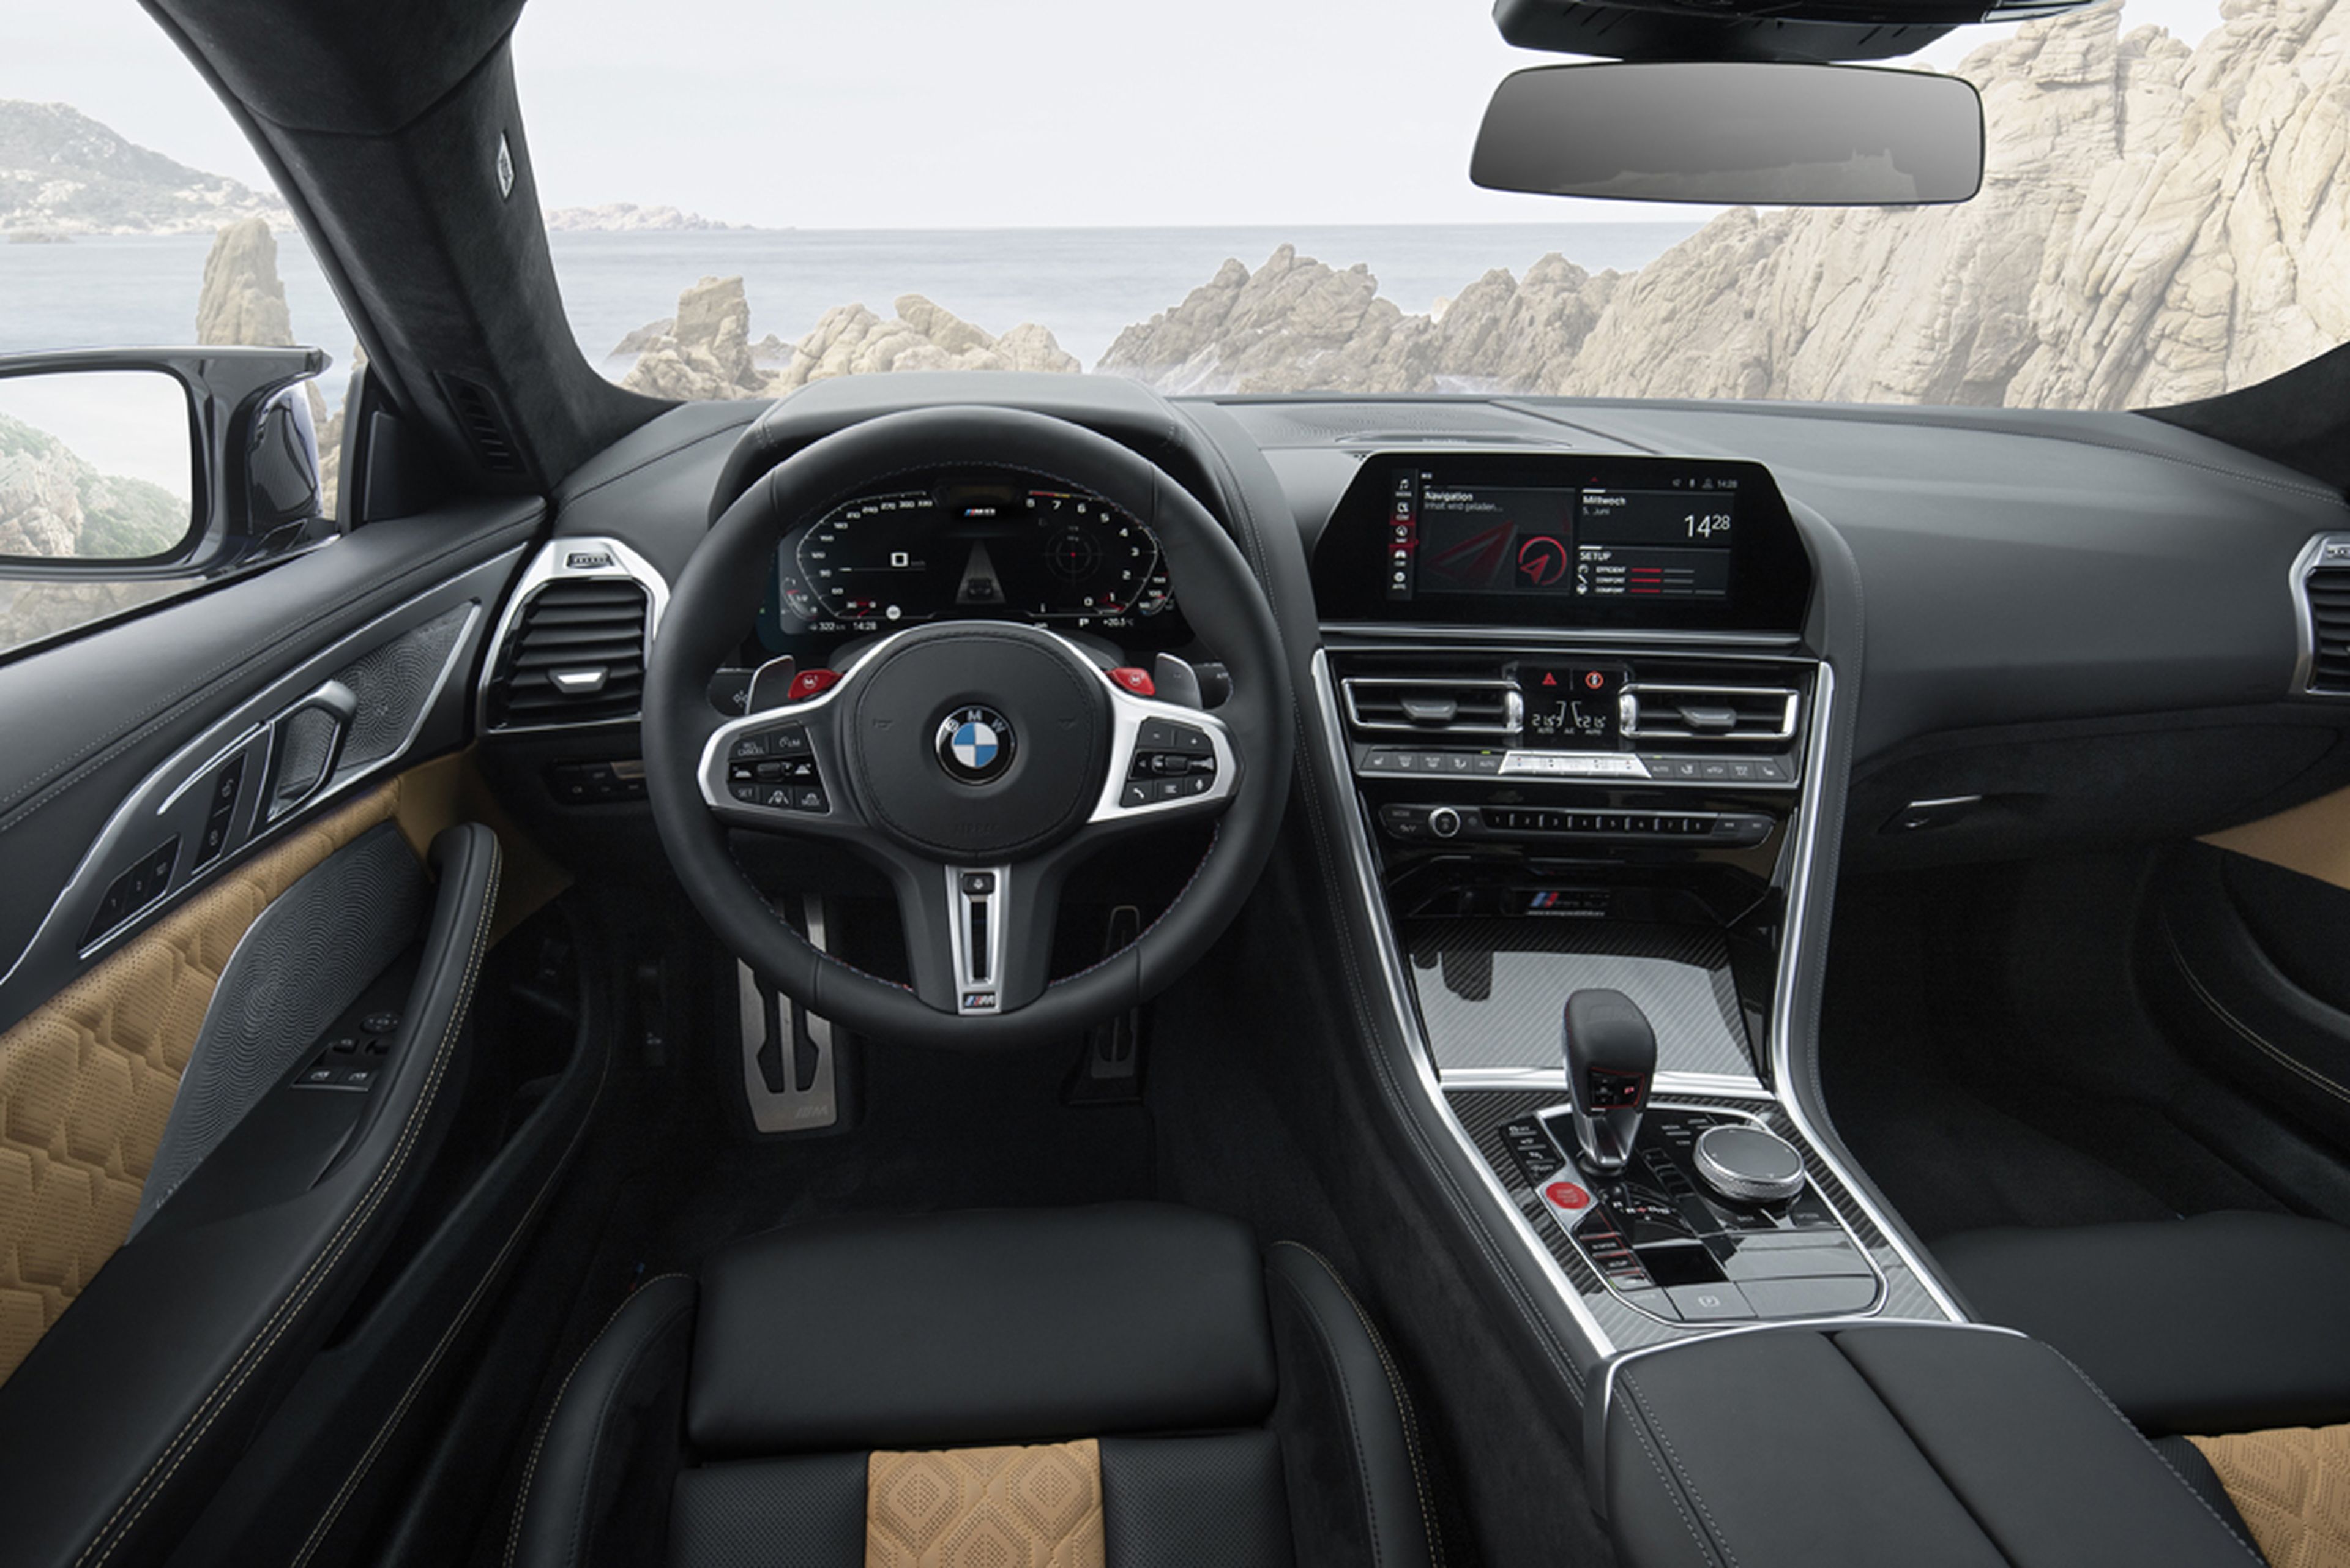 Prueba: BMW M8 Competition Coupé 2020